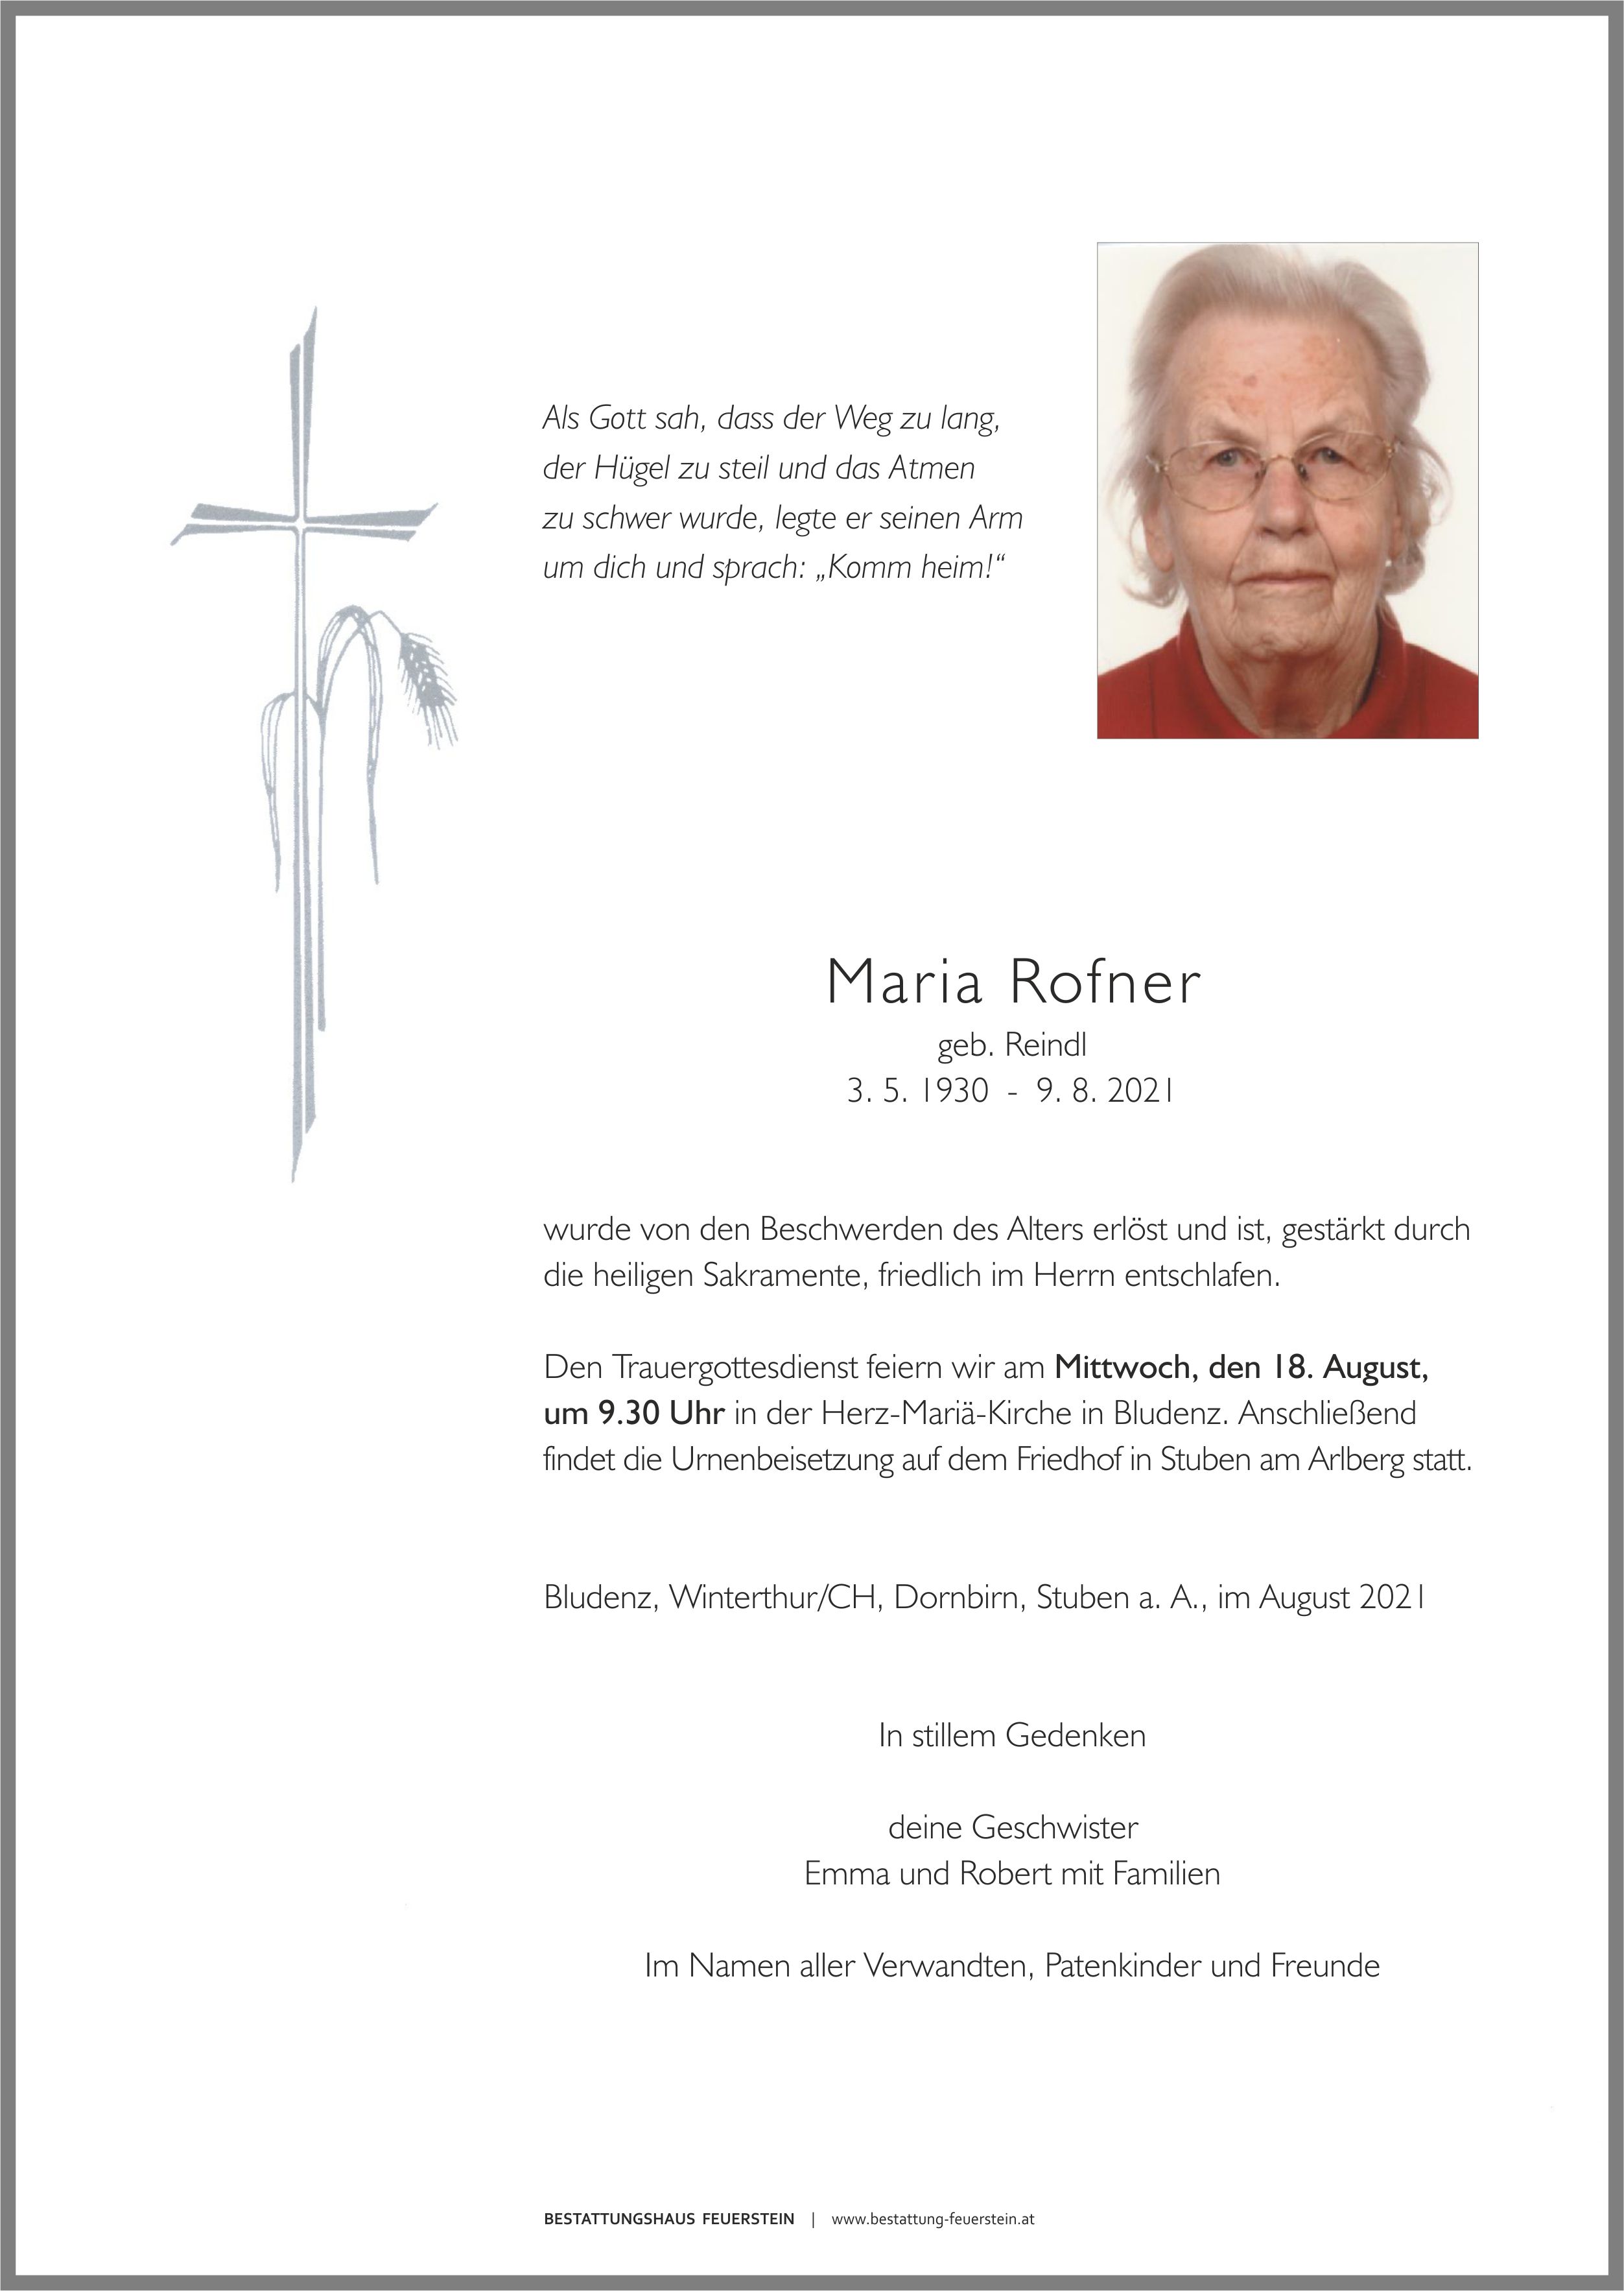 Maria Rofner